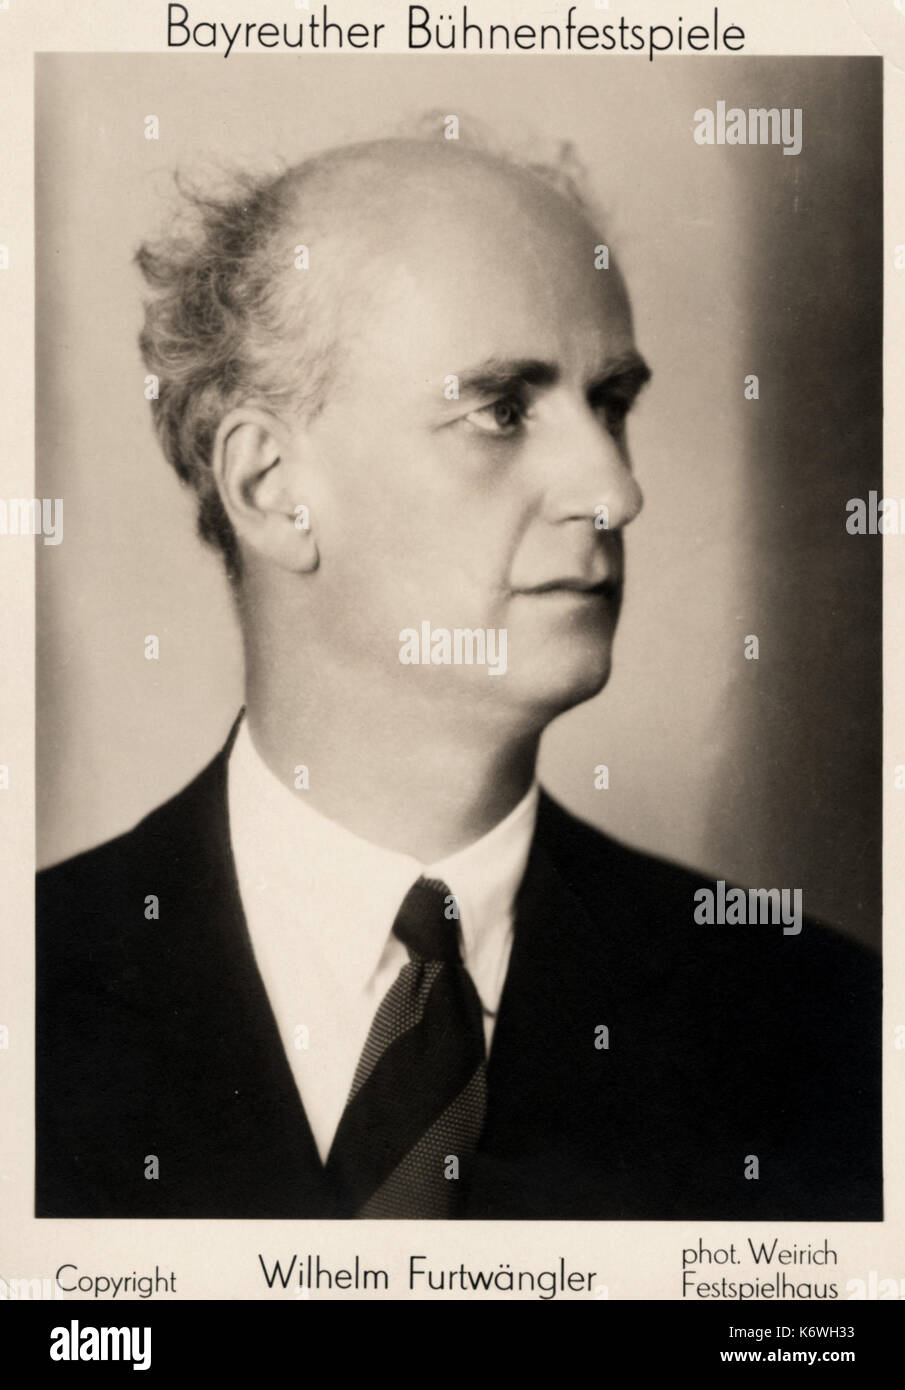 Wilhelm Furtwängler, portrait from Bayreuth Festival. German conductor and composer, 1886-1954. Photo:Weirich Festspielhaus Stock Photo